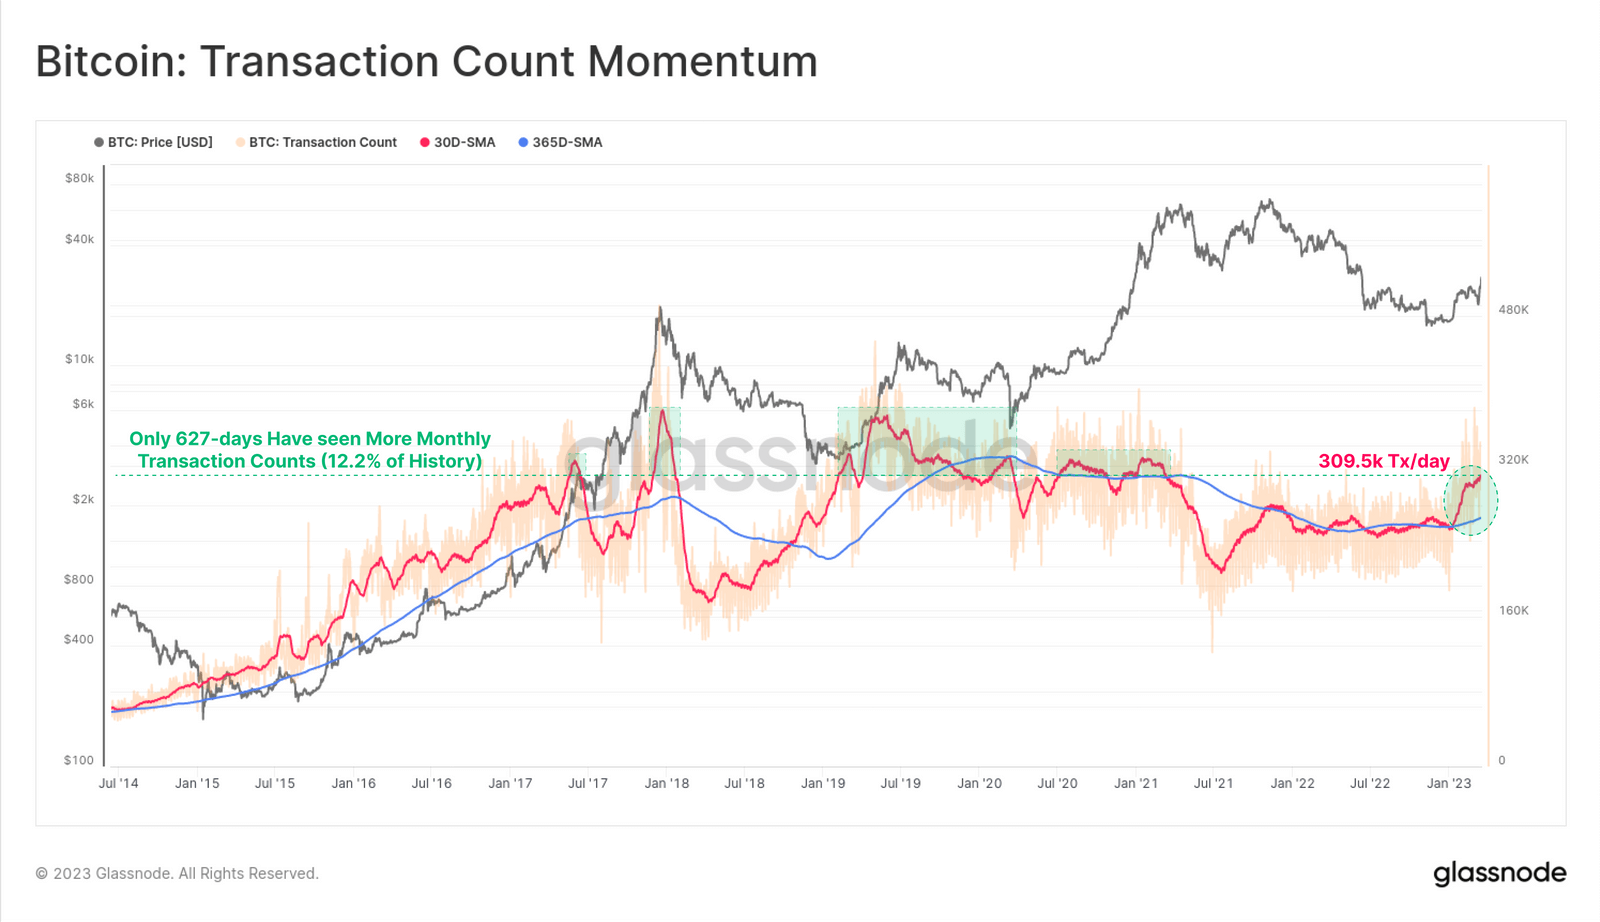 Bitcoin transaction momentum